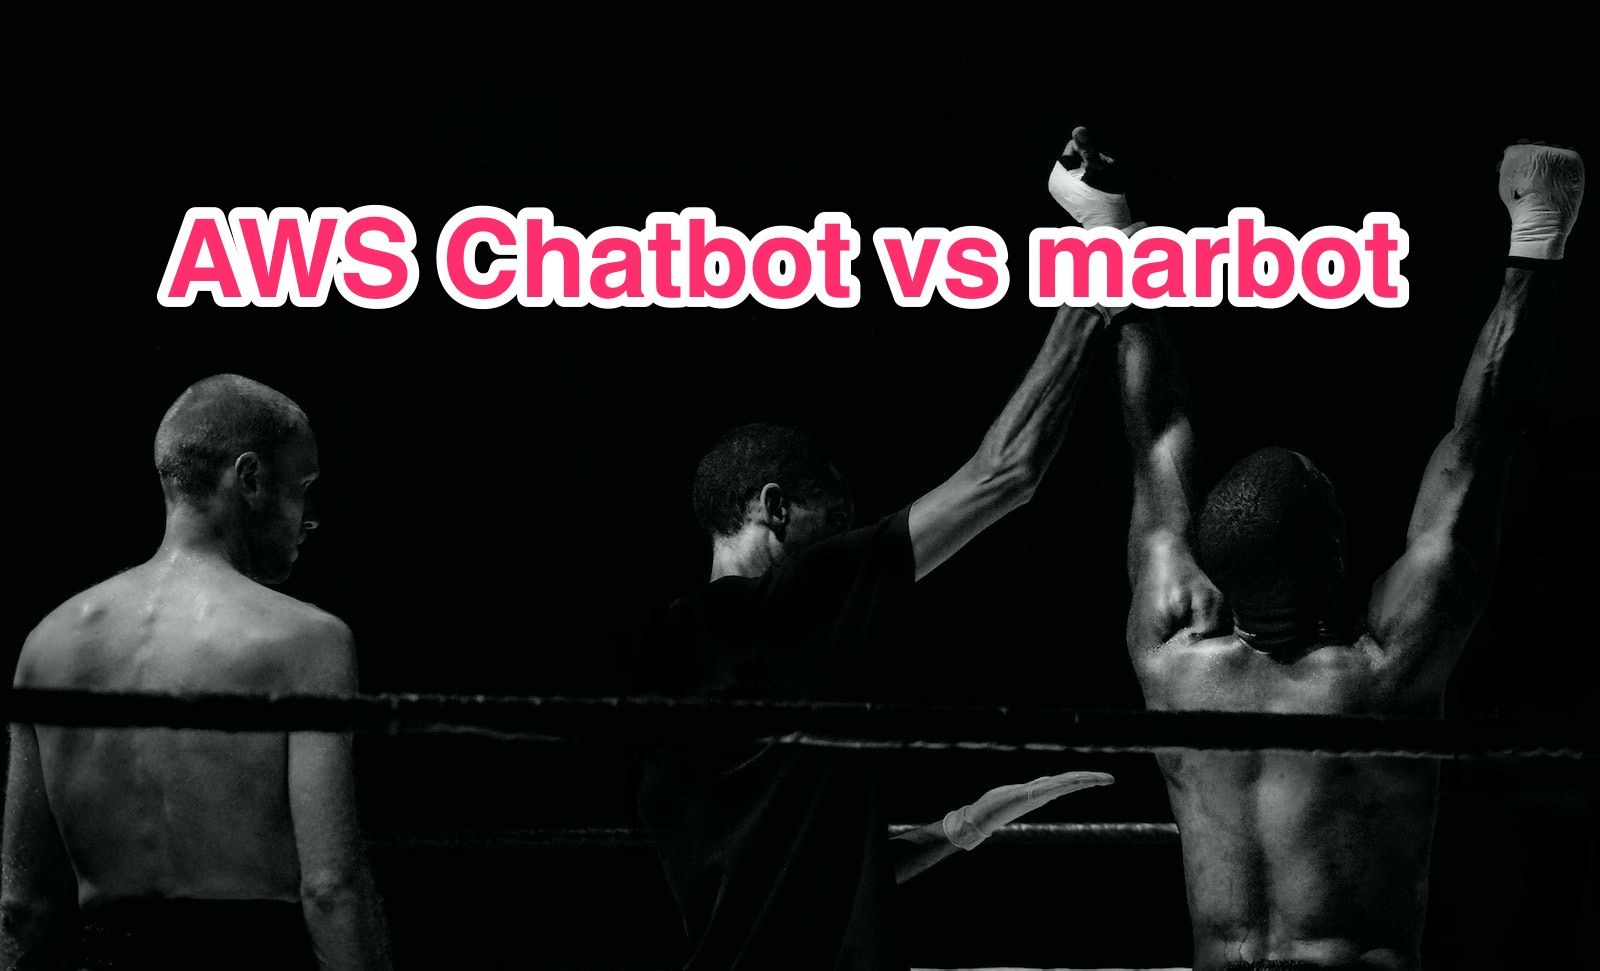 AWS Chatbot versus marbot